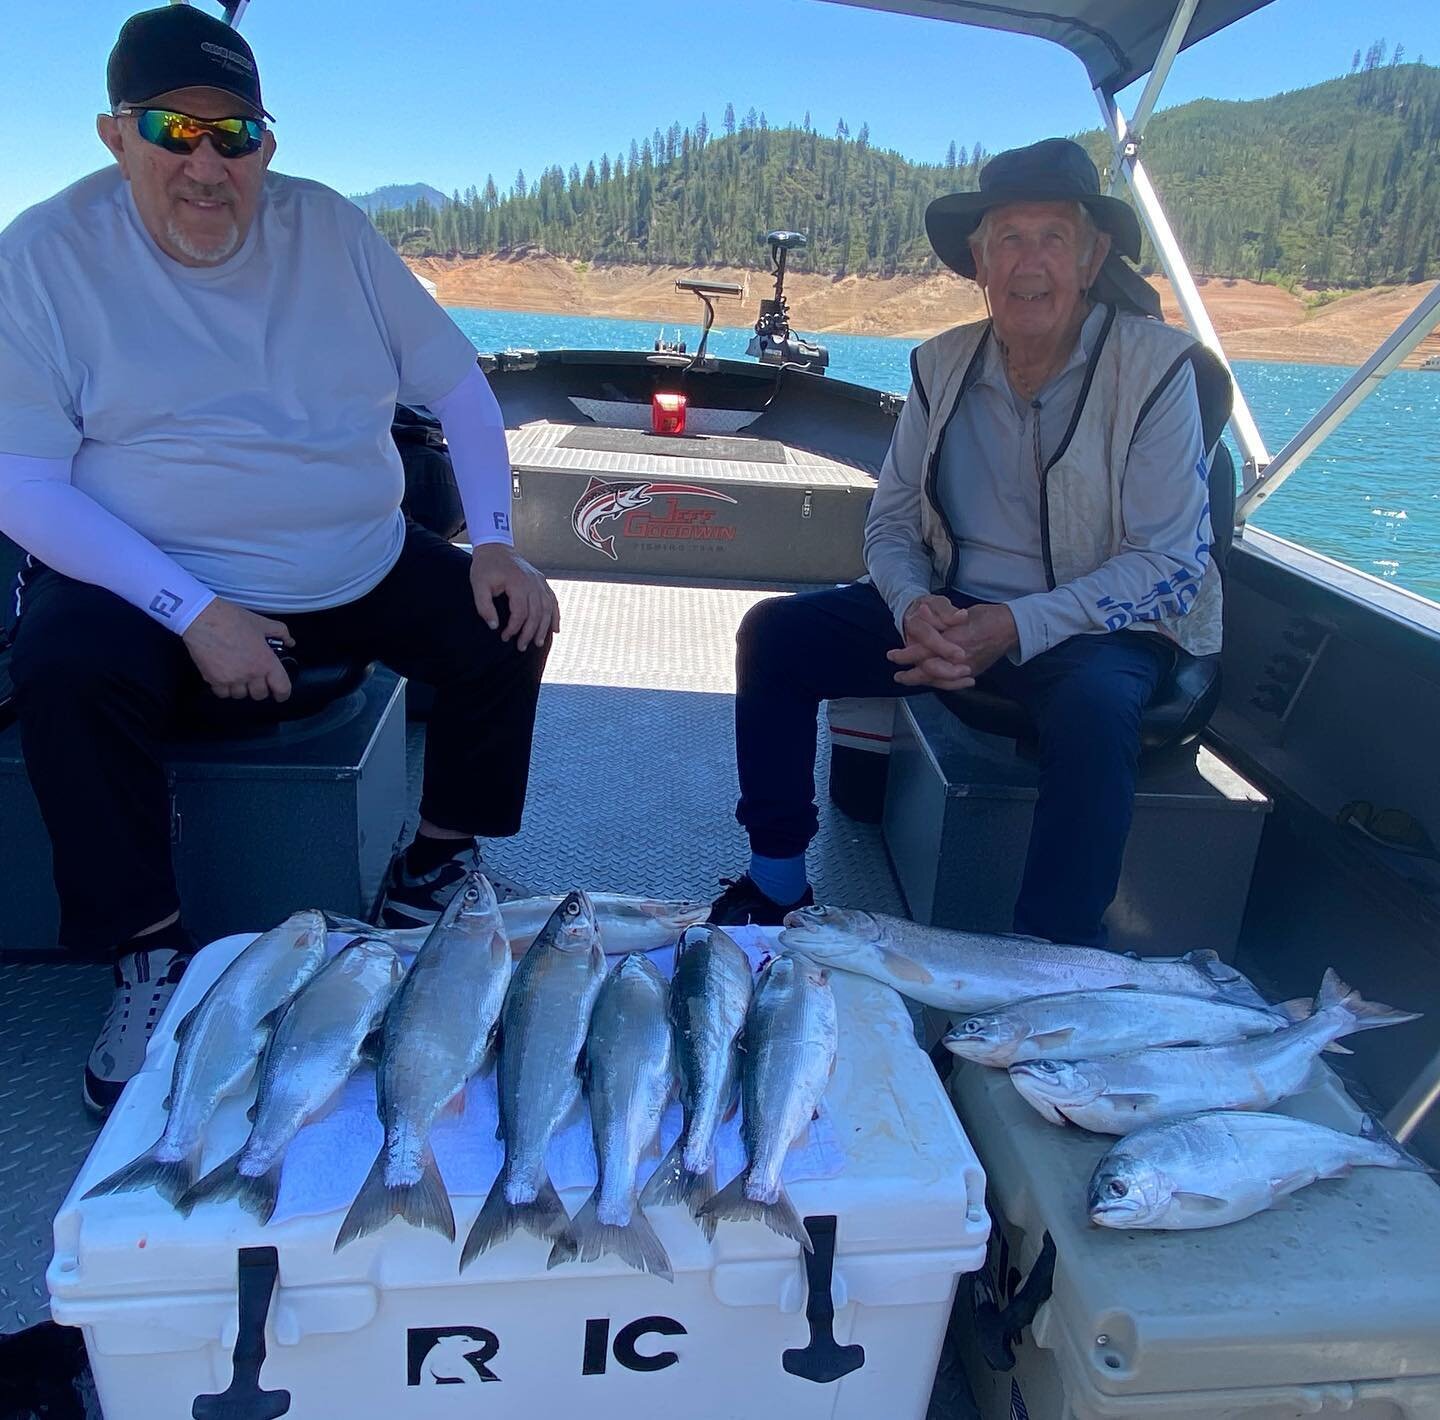 #jtfishingredding Shasta lake Kokanee fishing is firing off. We filled the cooler again today with Kokanee salmon!
@jeffgoodwinfishingteam 
.
.
.
@pautzke_bait @bradskillerfishinggear #shastalake #shasta #kingsalmon #troutfishing #fishingtrips #fishi